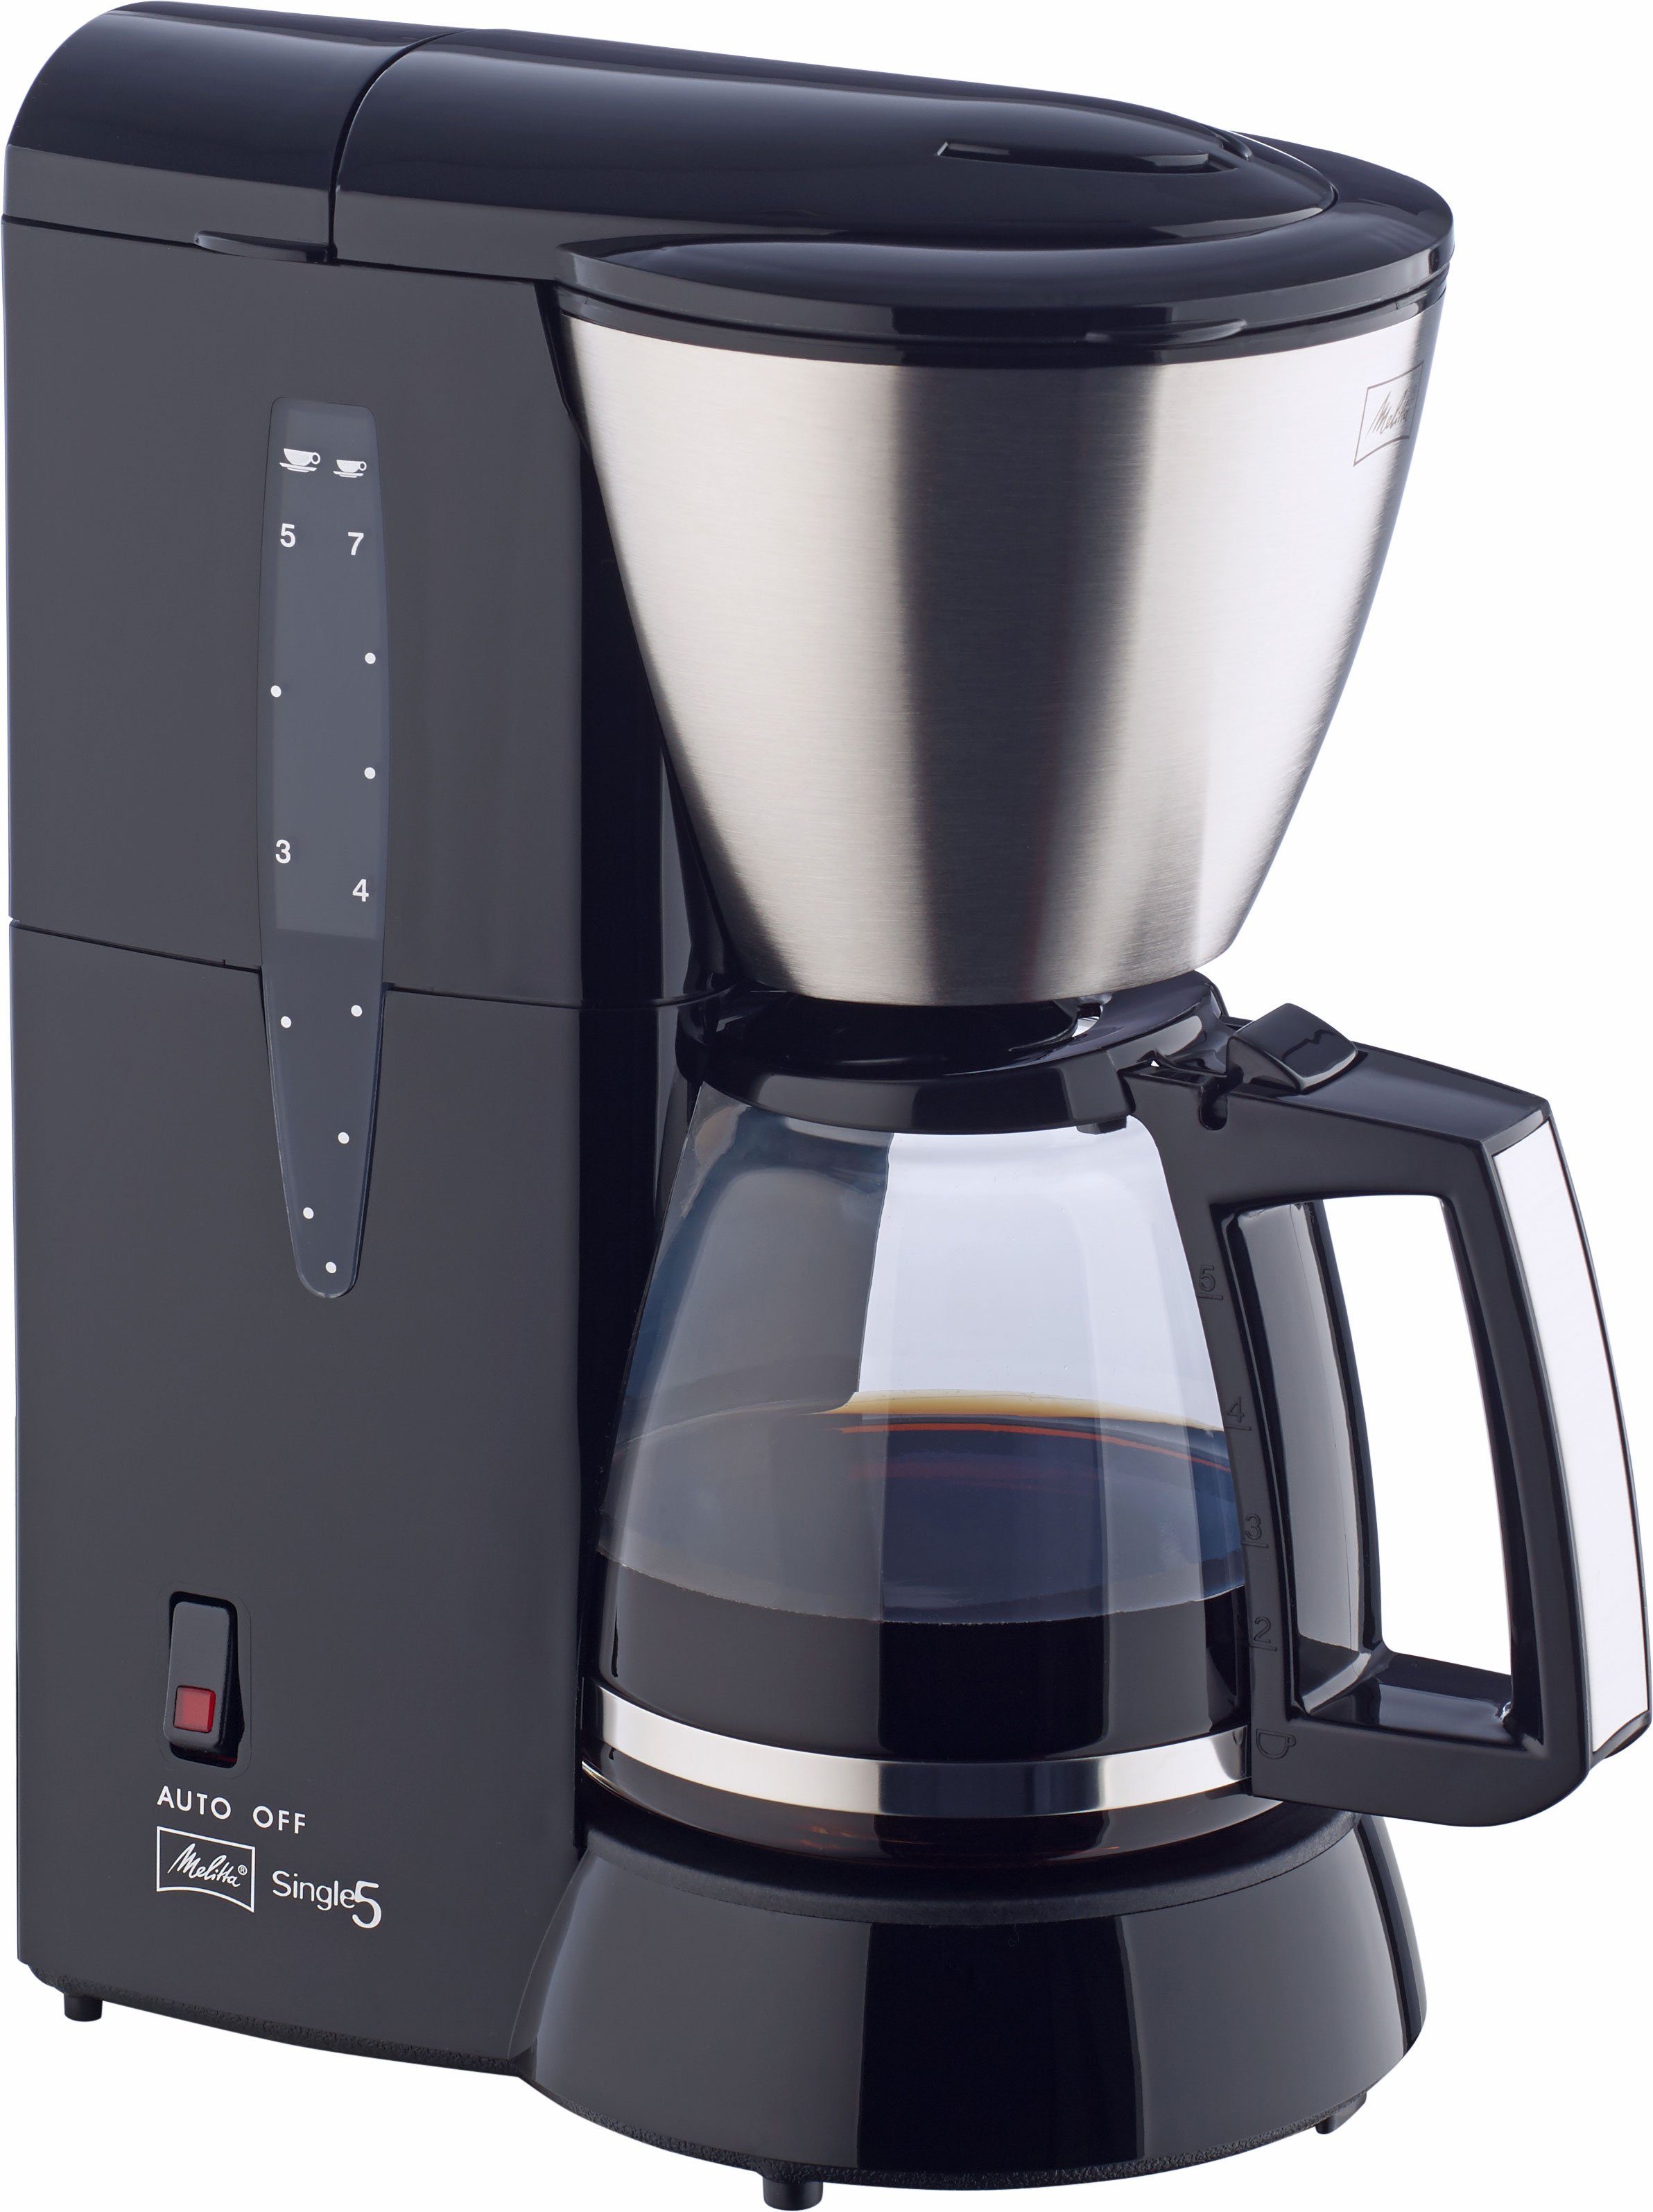 Melitta Filterkaffeemaschine Single kompakt, Tassen edelstahlfarben/schwarz 5 720 M 5 1x2